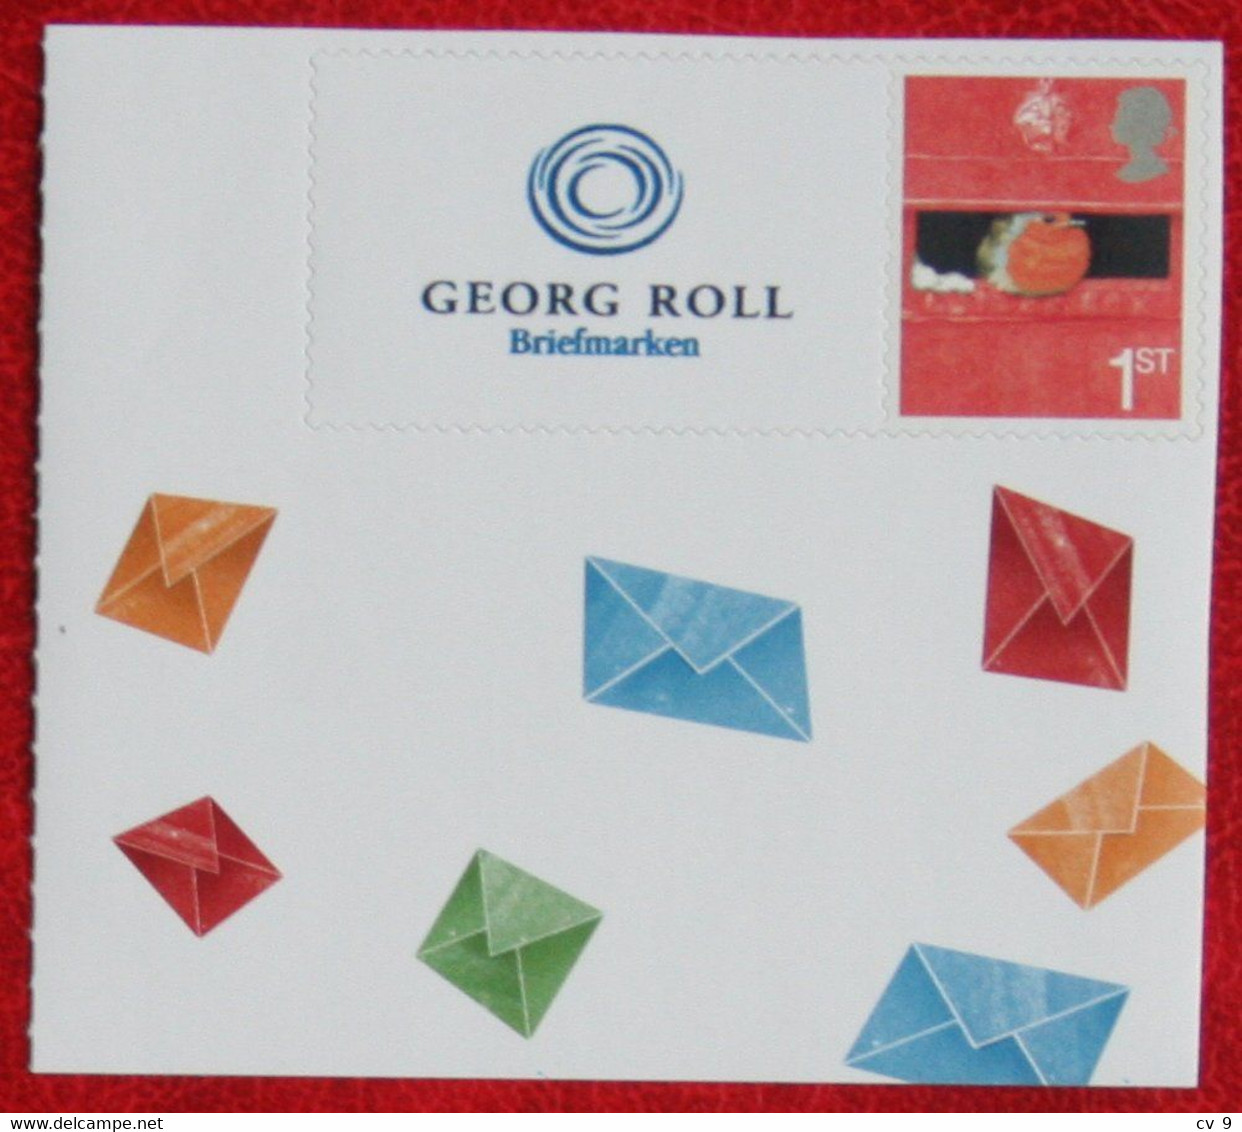 Smiler Smilers Personal Stamp Georg Roll Briefmarken ROBIN Bird POSTFRIS MNH ** ENGLAND GRANDE-BRETAGNE GB GREAT BRITAIN - Smilers Sheets